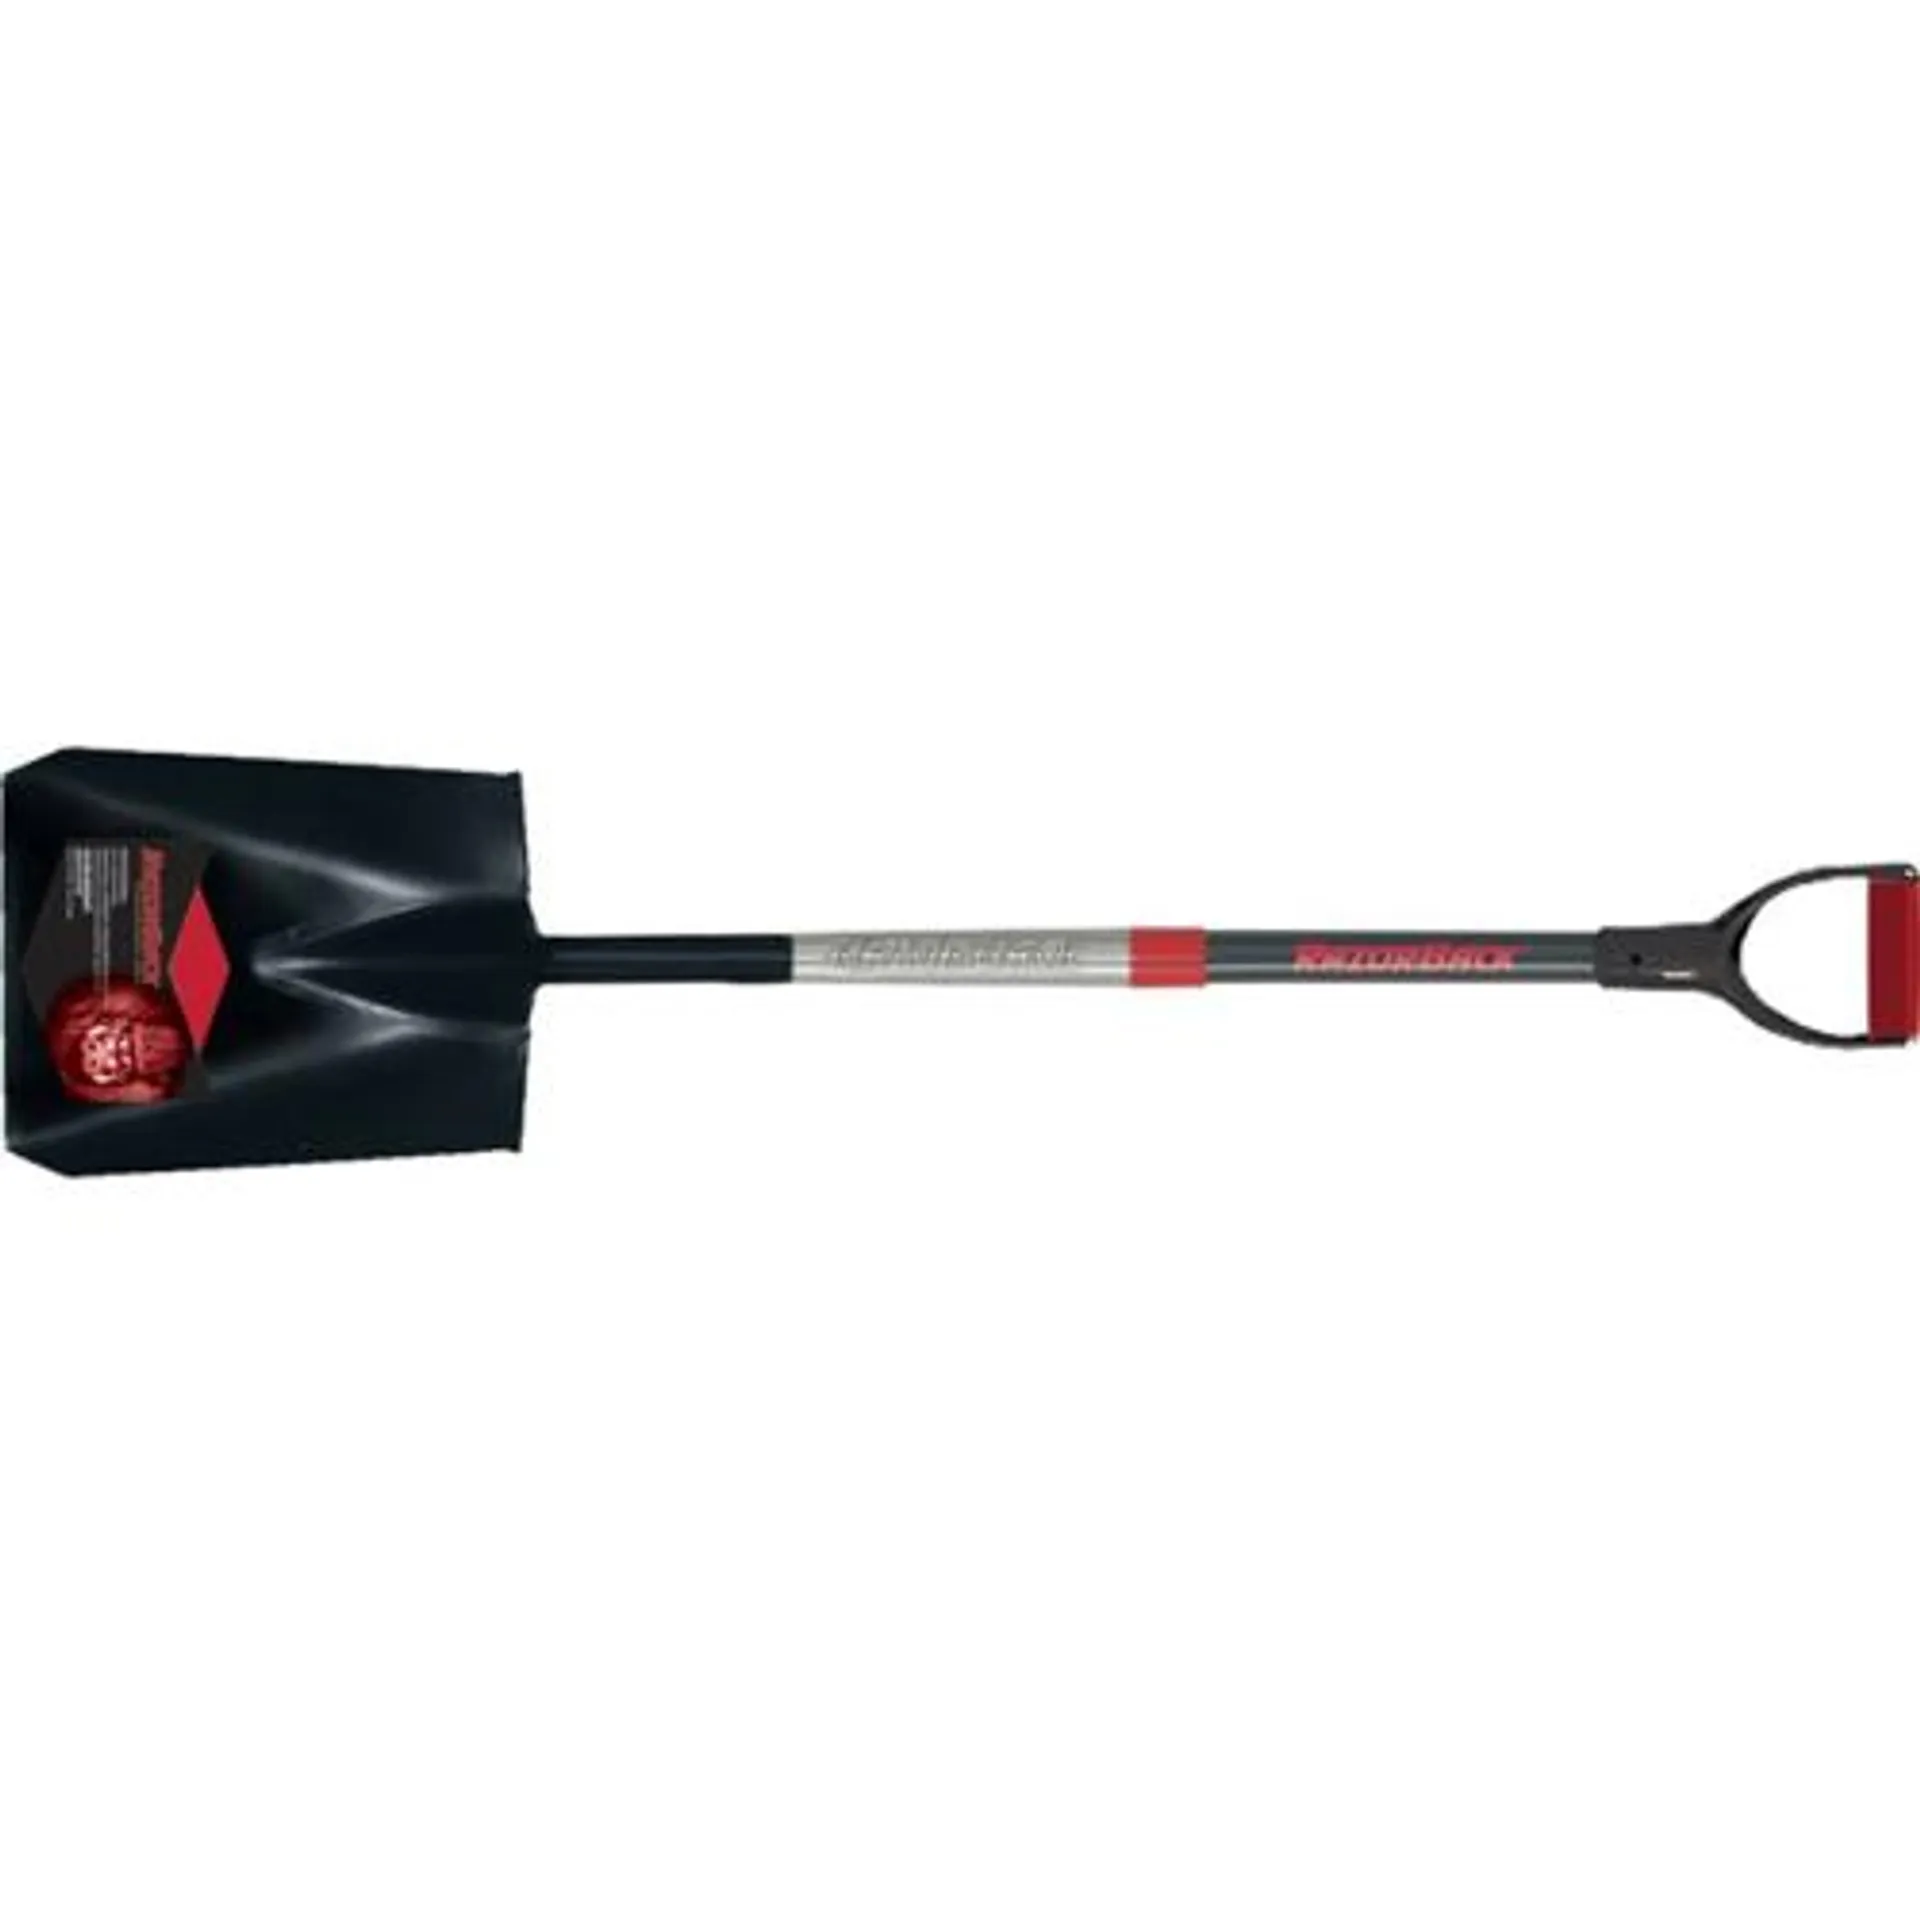 Razor-Back Square Point Shovel w/ Extended Socket, Fiberglass Handle and D-Grip